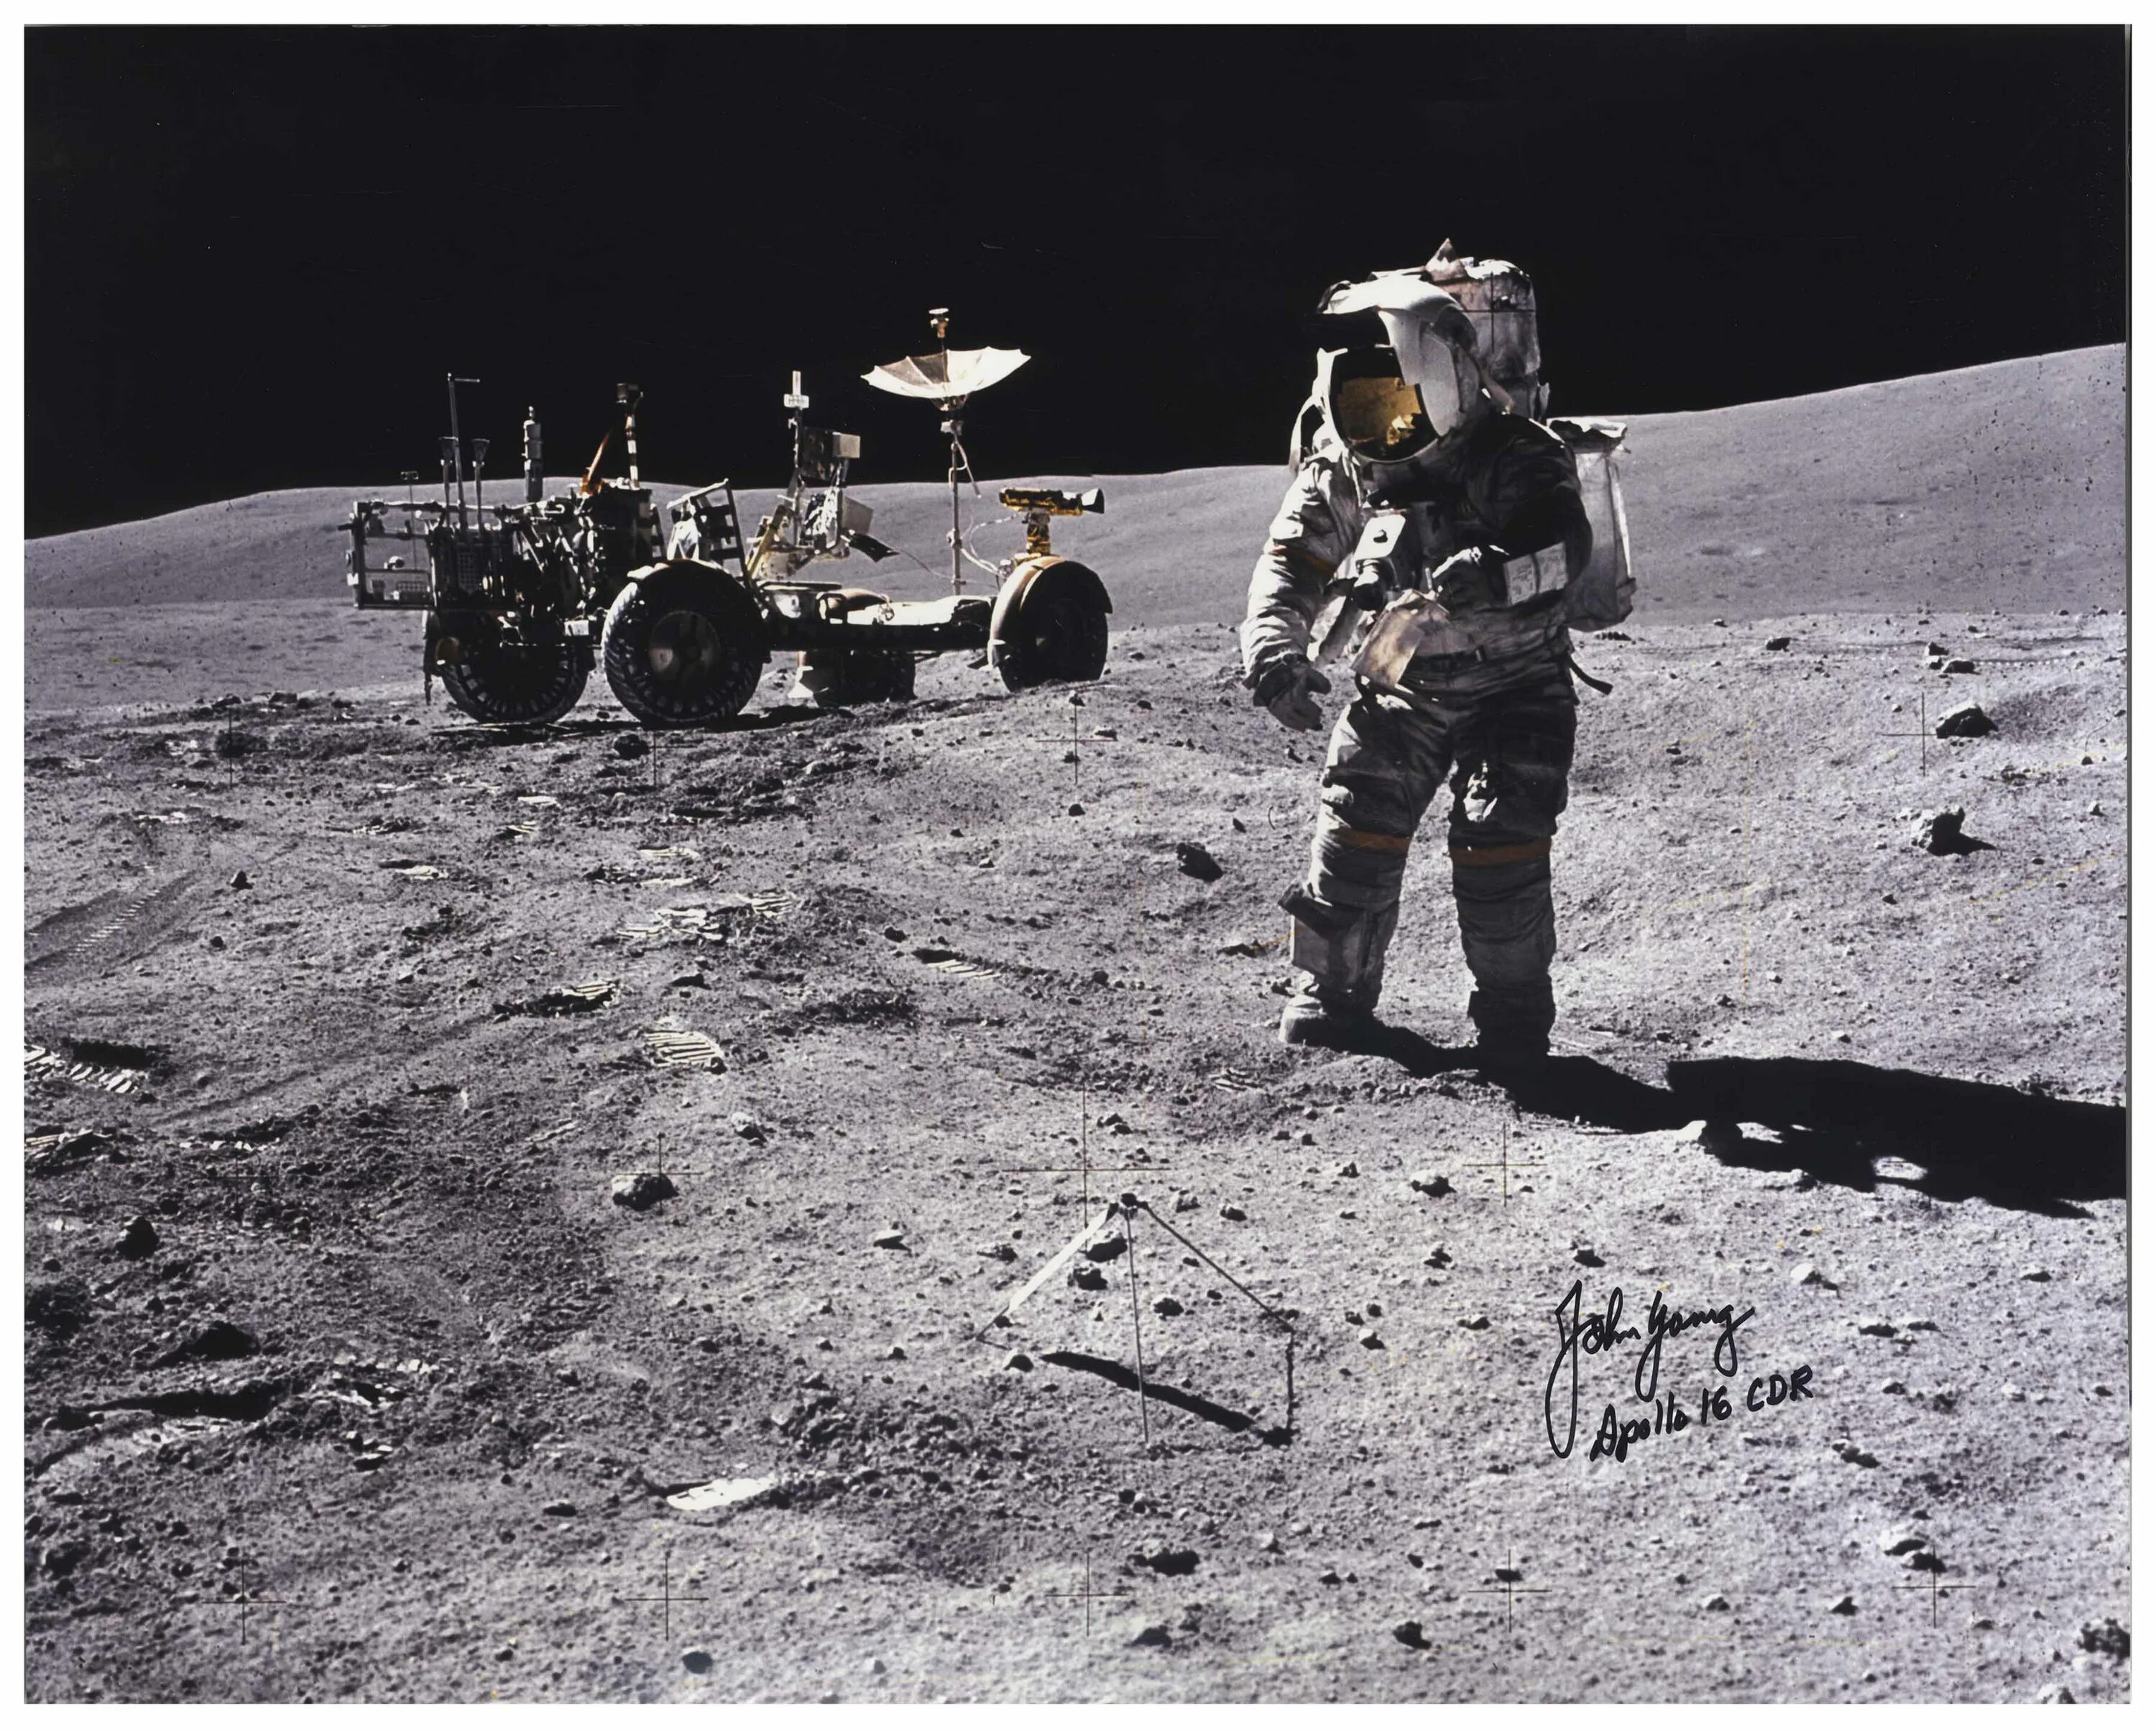 Первая посадка на луну год. Аполлон 11 высадка. Аполло-14 астронавты на Луне. Миссия Аполлон 11. Американцы на Луне 1969.